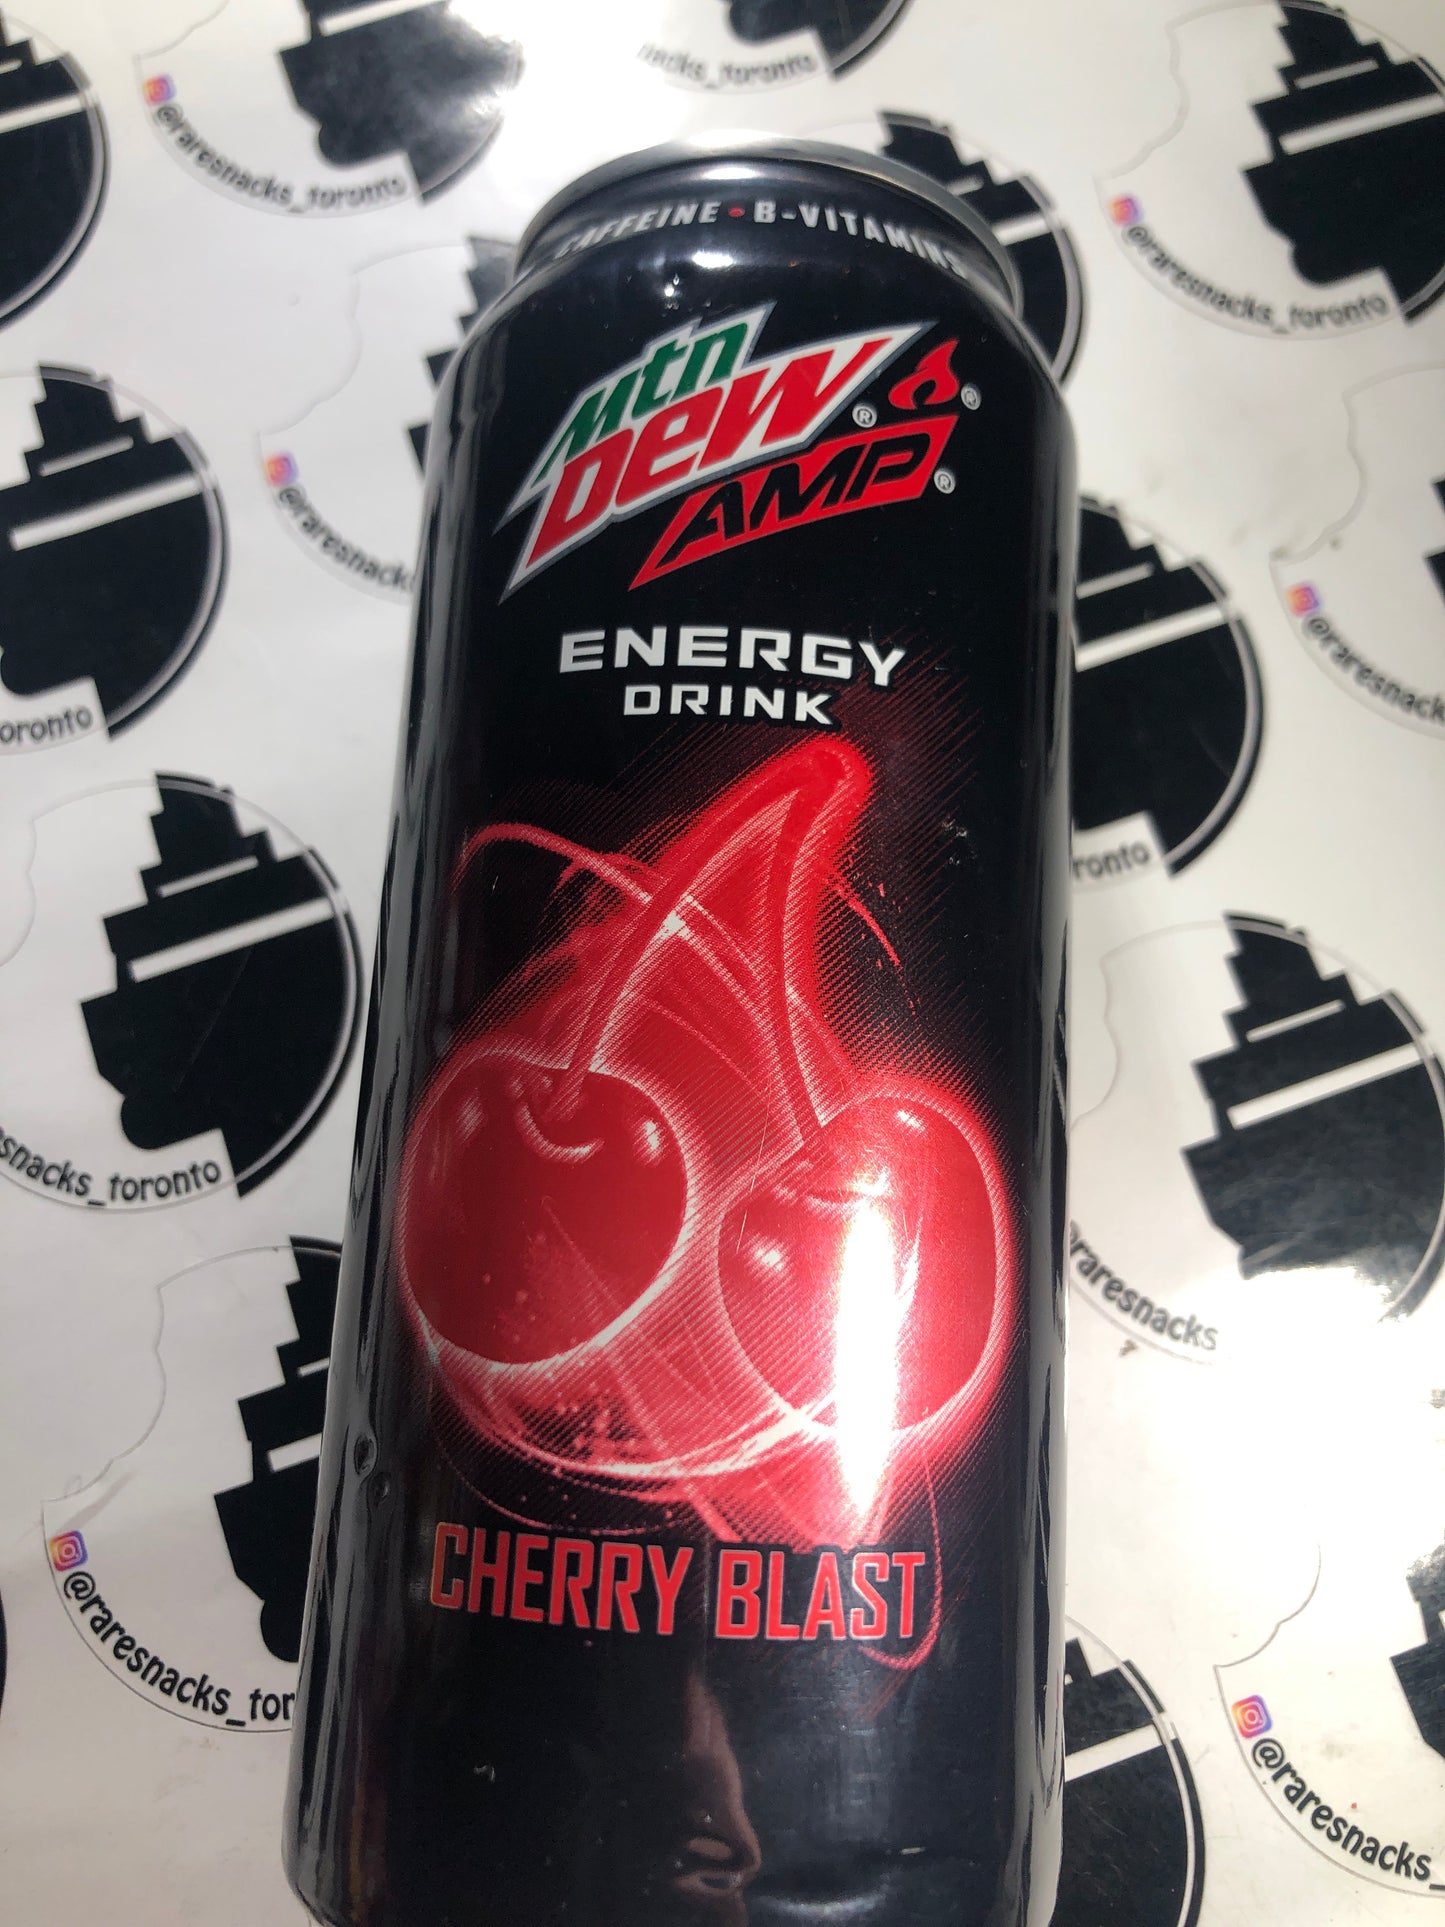 Mountain Dew Amp Cherry Blast